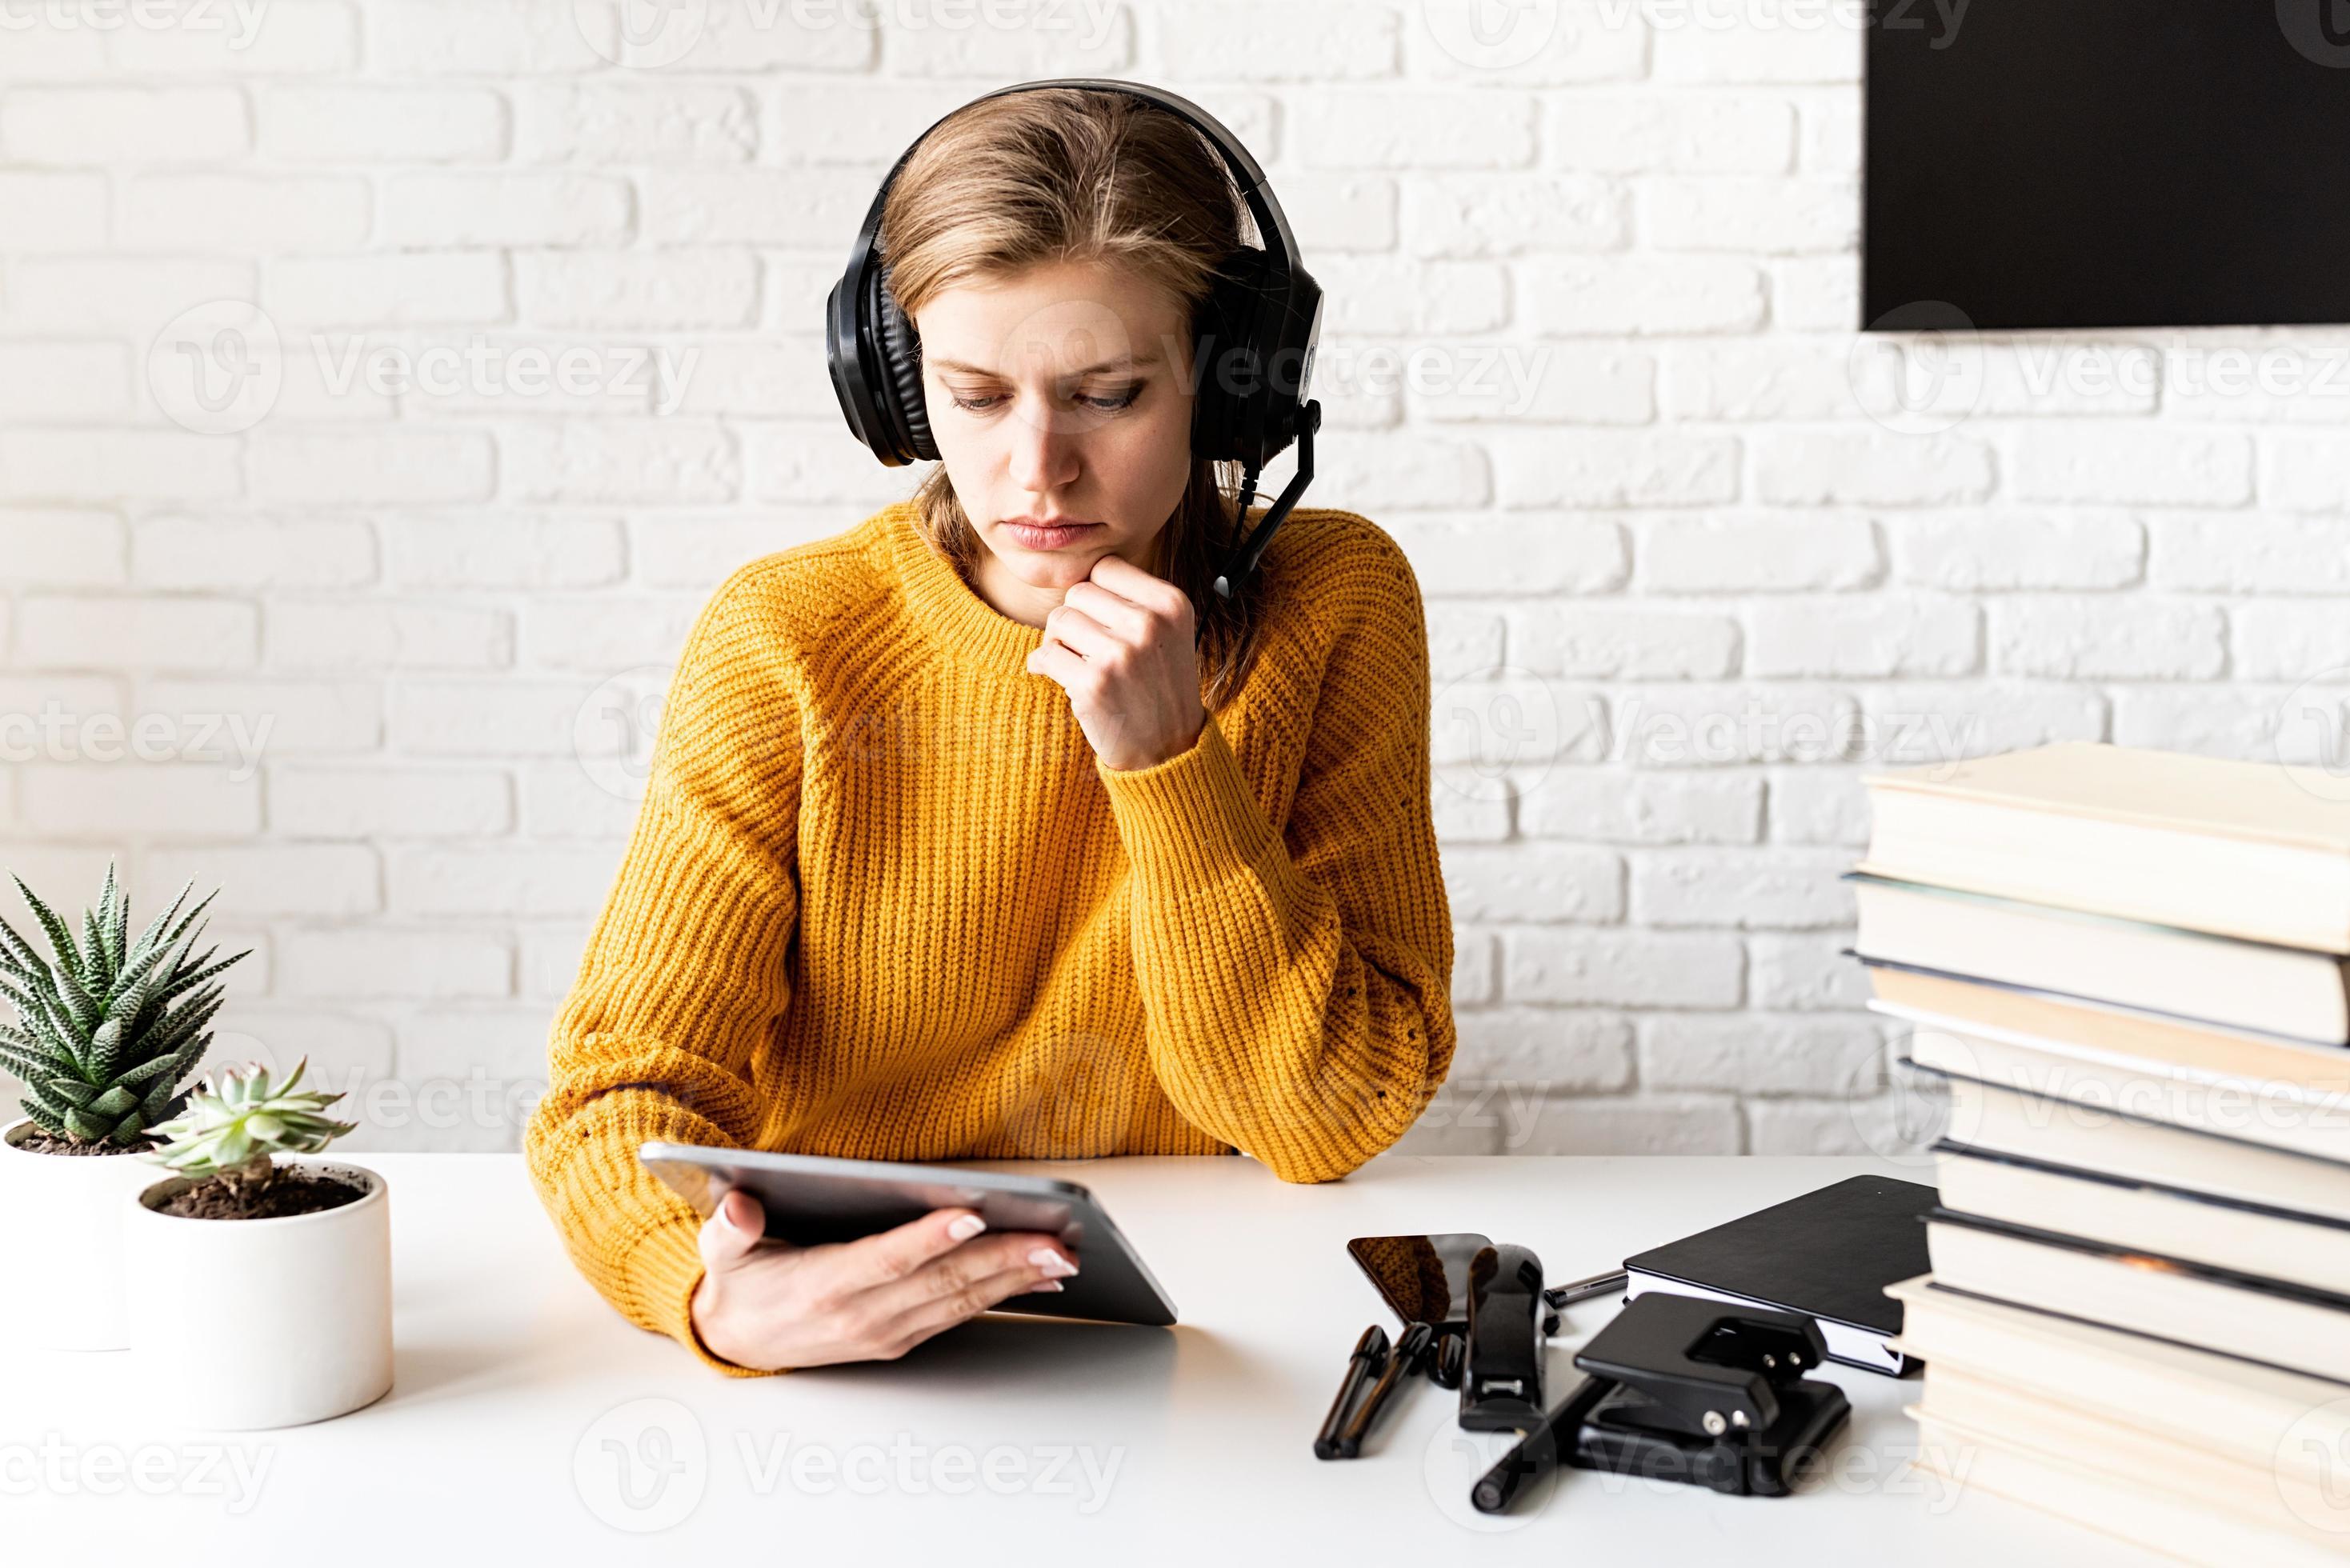 Frau in schwarzen Kopfhörern, die online mit digitalem Tablet studiert foto